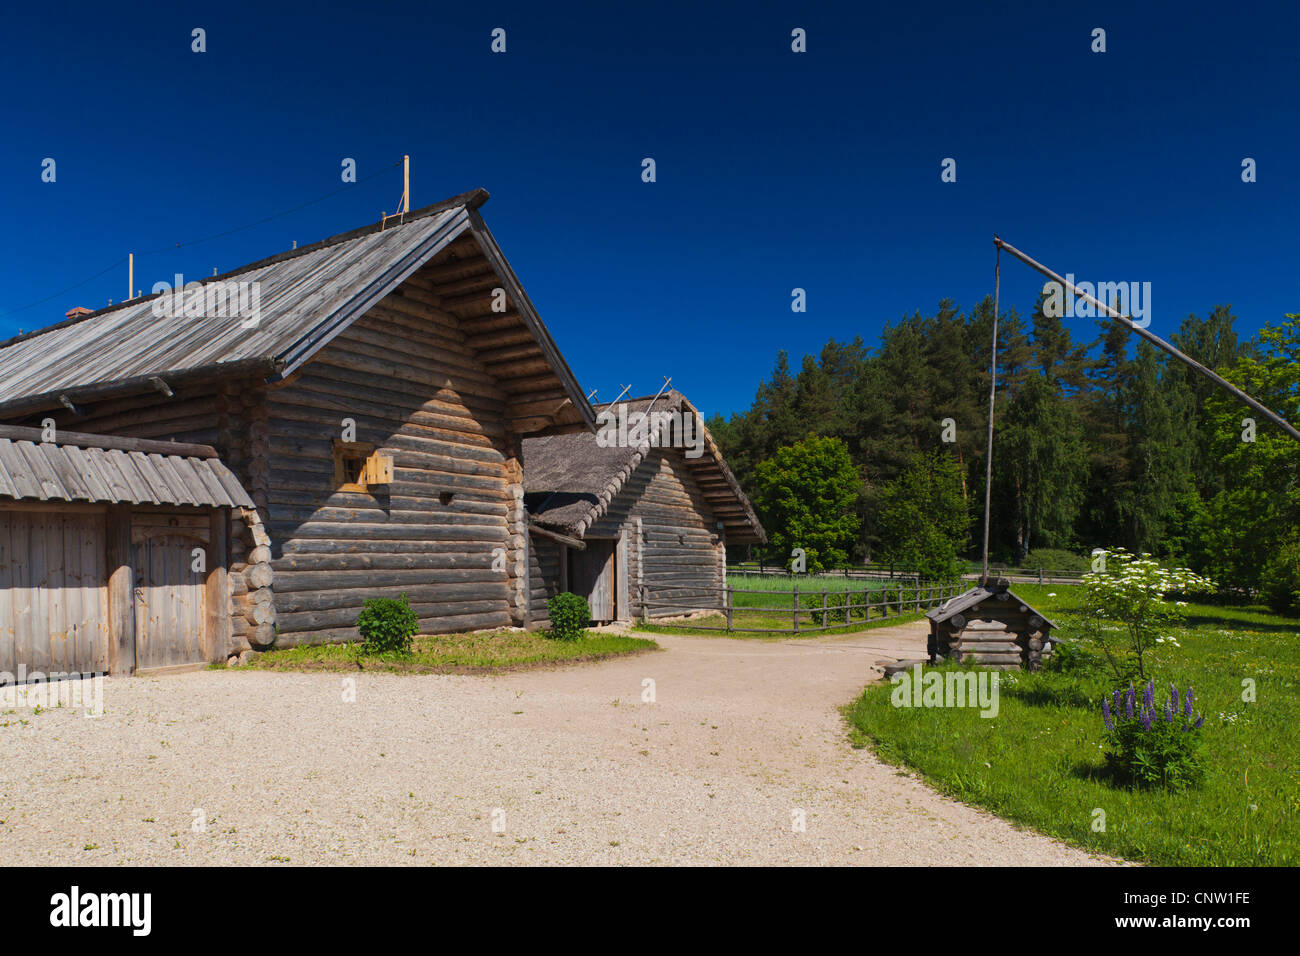 Russia, Pskovskaya Oblast, Pushkinskie Gory, wooden architecture museum Stock Photo